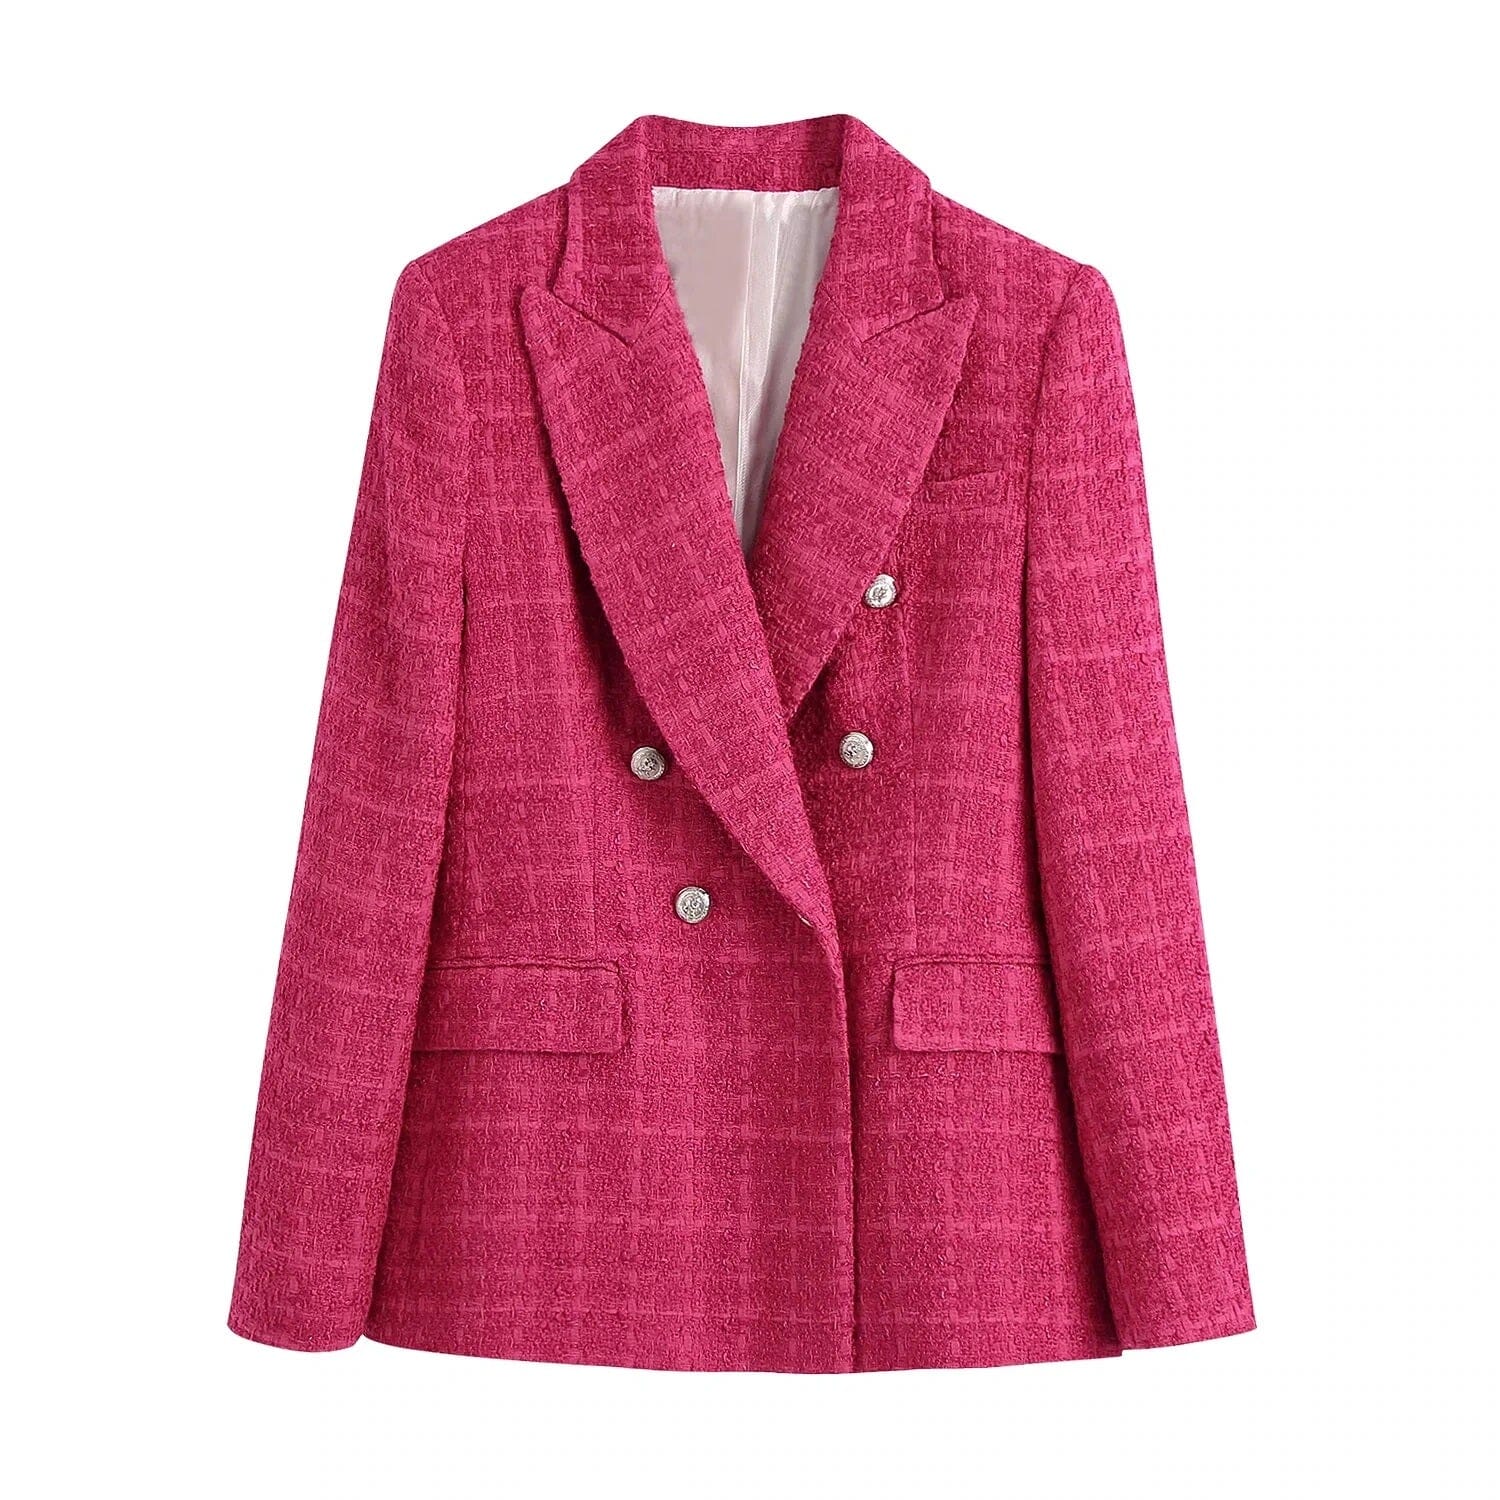 Women Long Sleeve Double Breasted Tweed Woolen Casual Open Front Blazer Jacket Outerwear Work Suits Coats & Jackets jehouze Hot Pink XS 